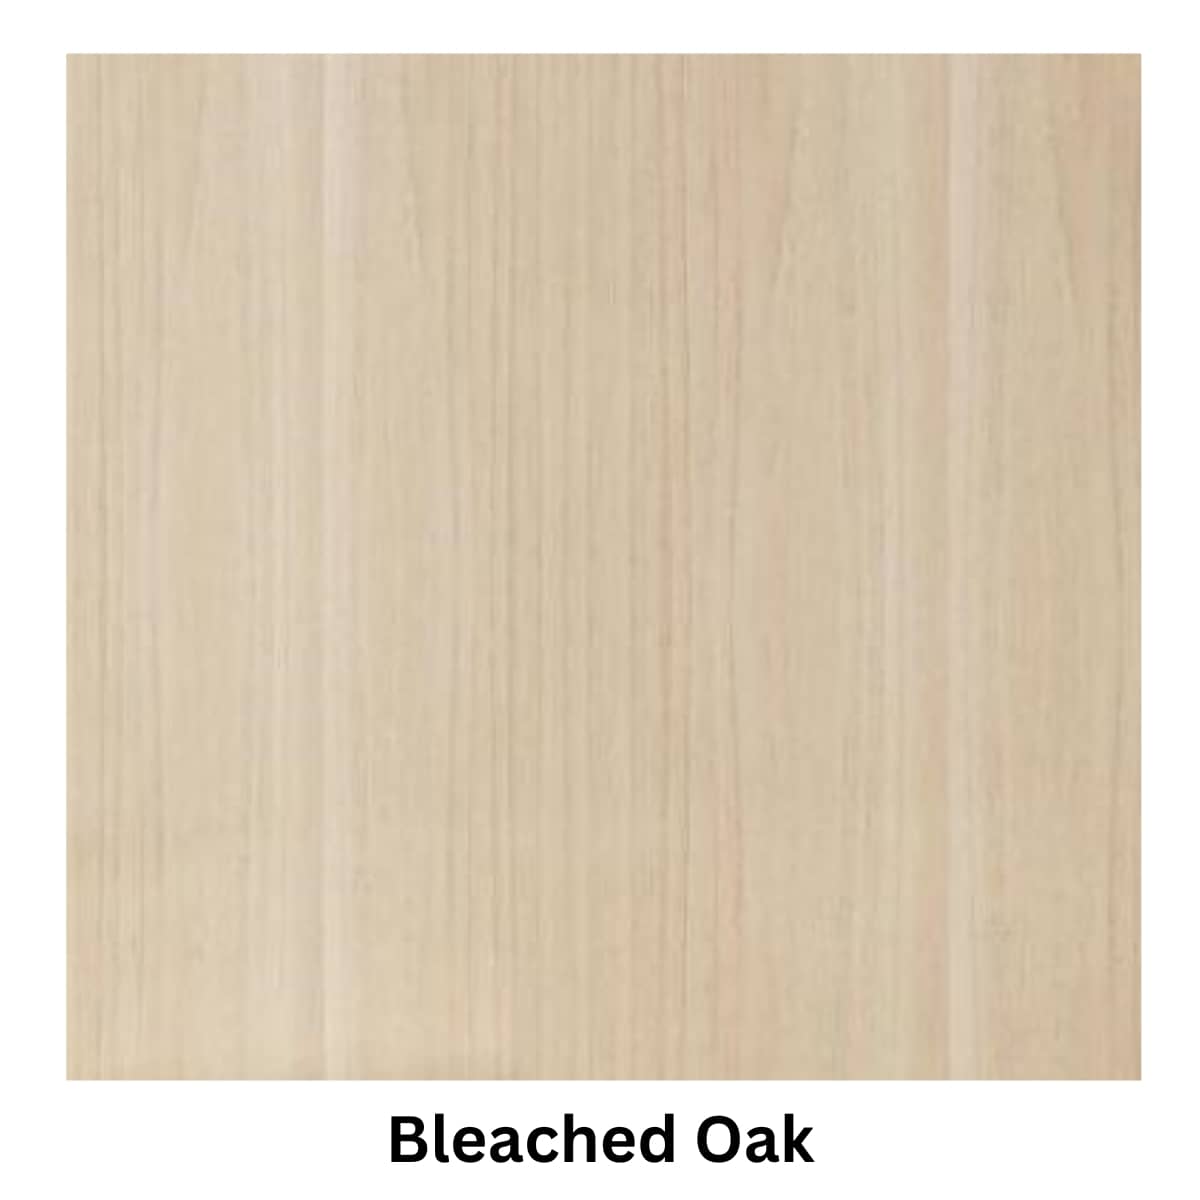 SewFine Cabinets Bleached Oak finish